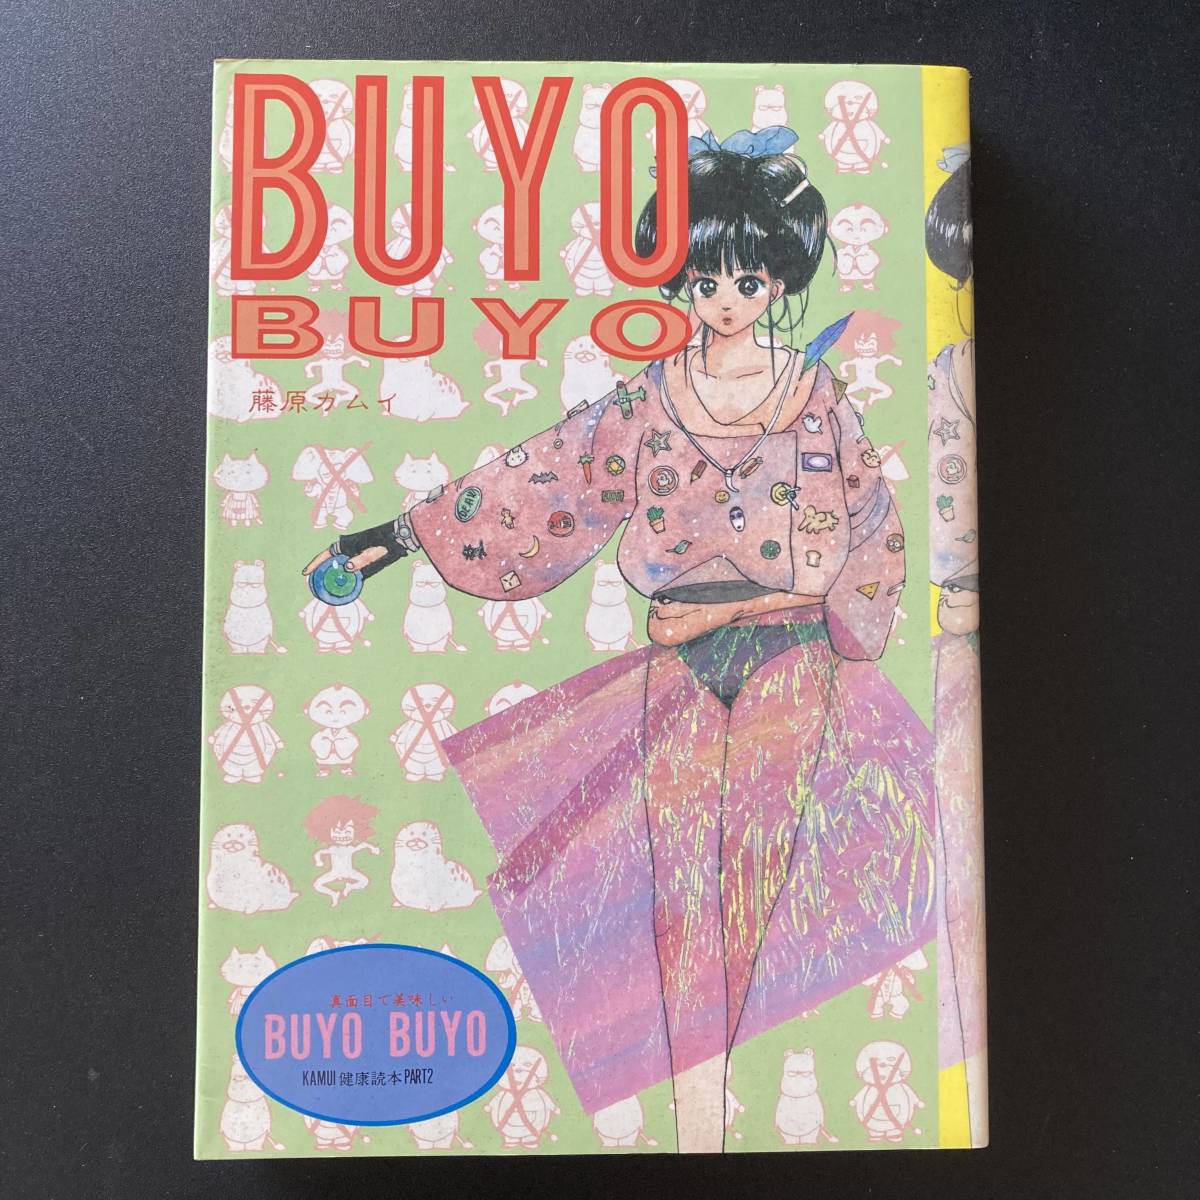 BUYO BUYO (白夜COMICS) / 藤原 カムイ (著)